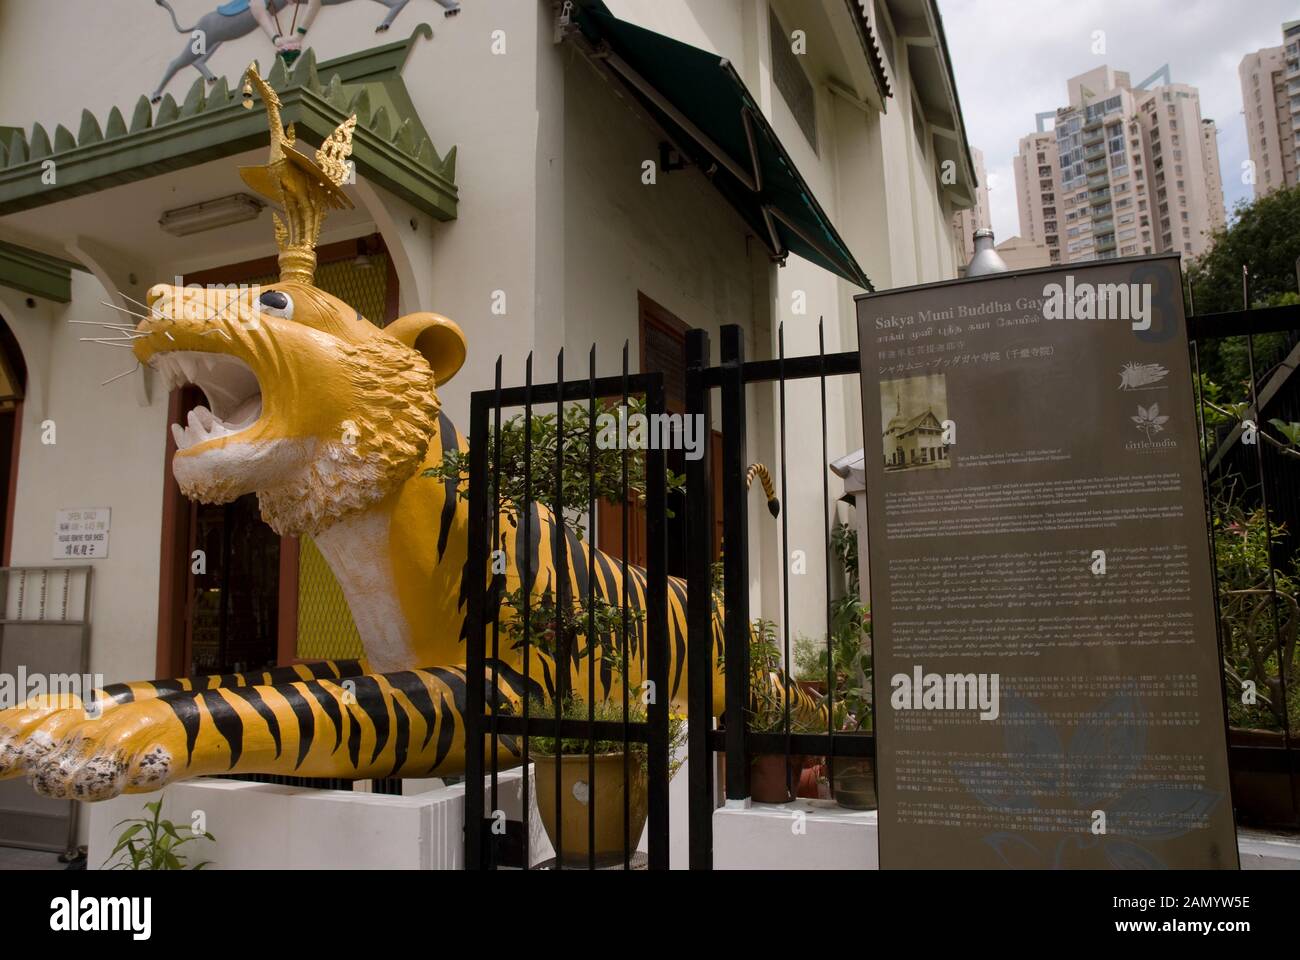 Segno e tiger fuori Sakaya Muni Buddha Gaya, Tempio di mille luci, Little India, Singapore Foto Stock